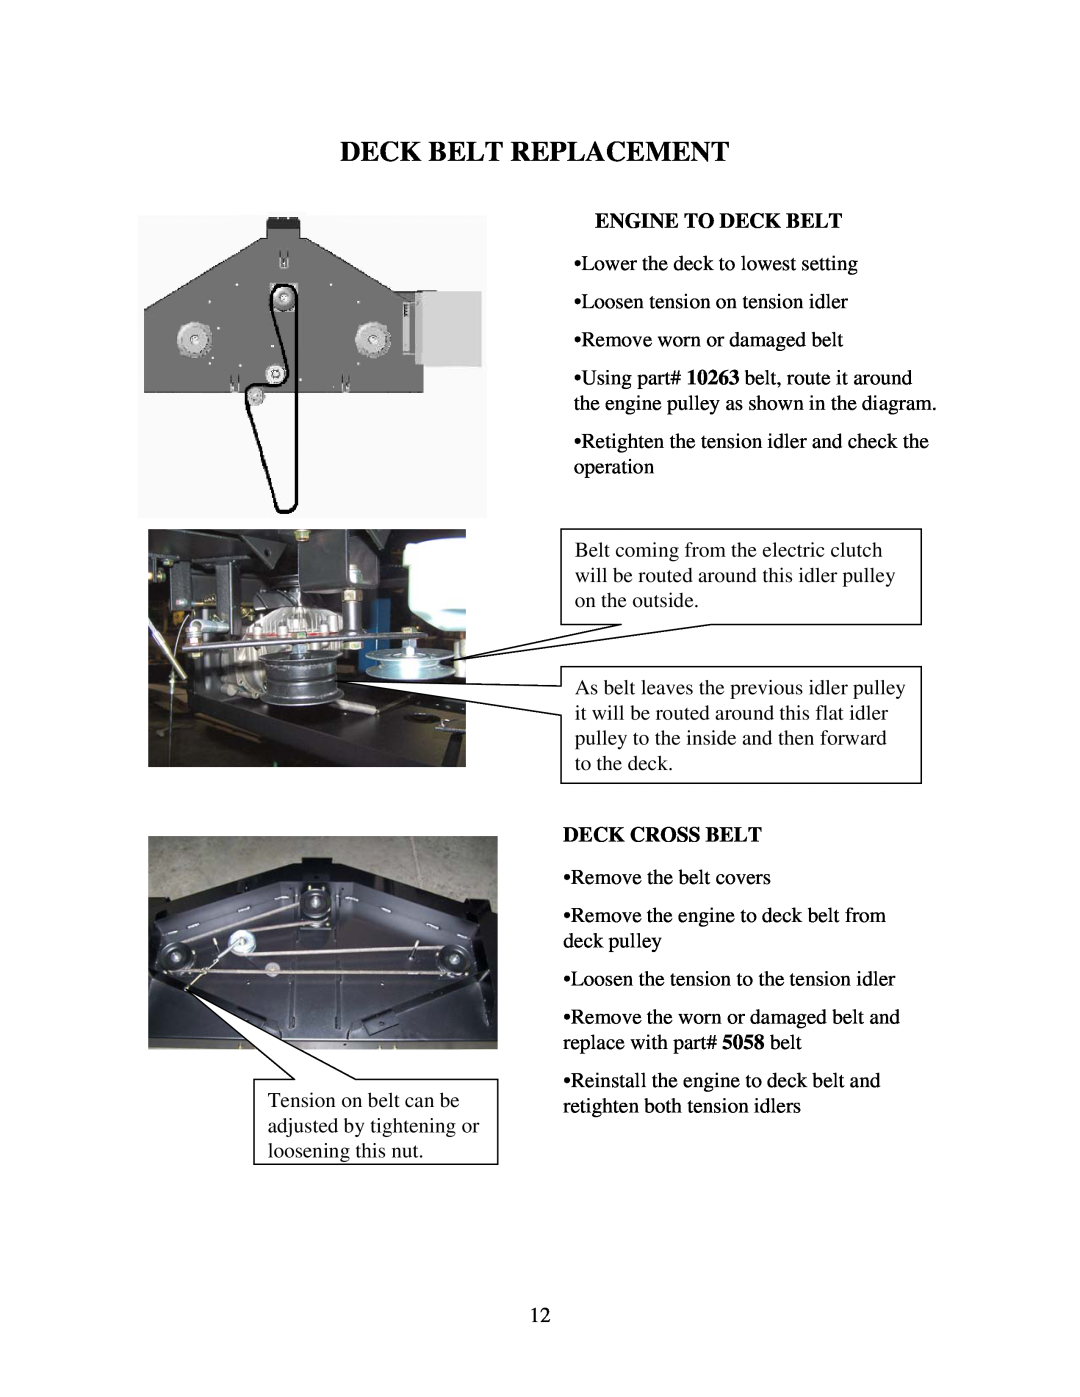 Swisher ZT2560 manual Deck Belt Replacement, Engine To Deck Belt, Deck Cross Belt 